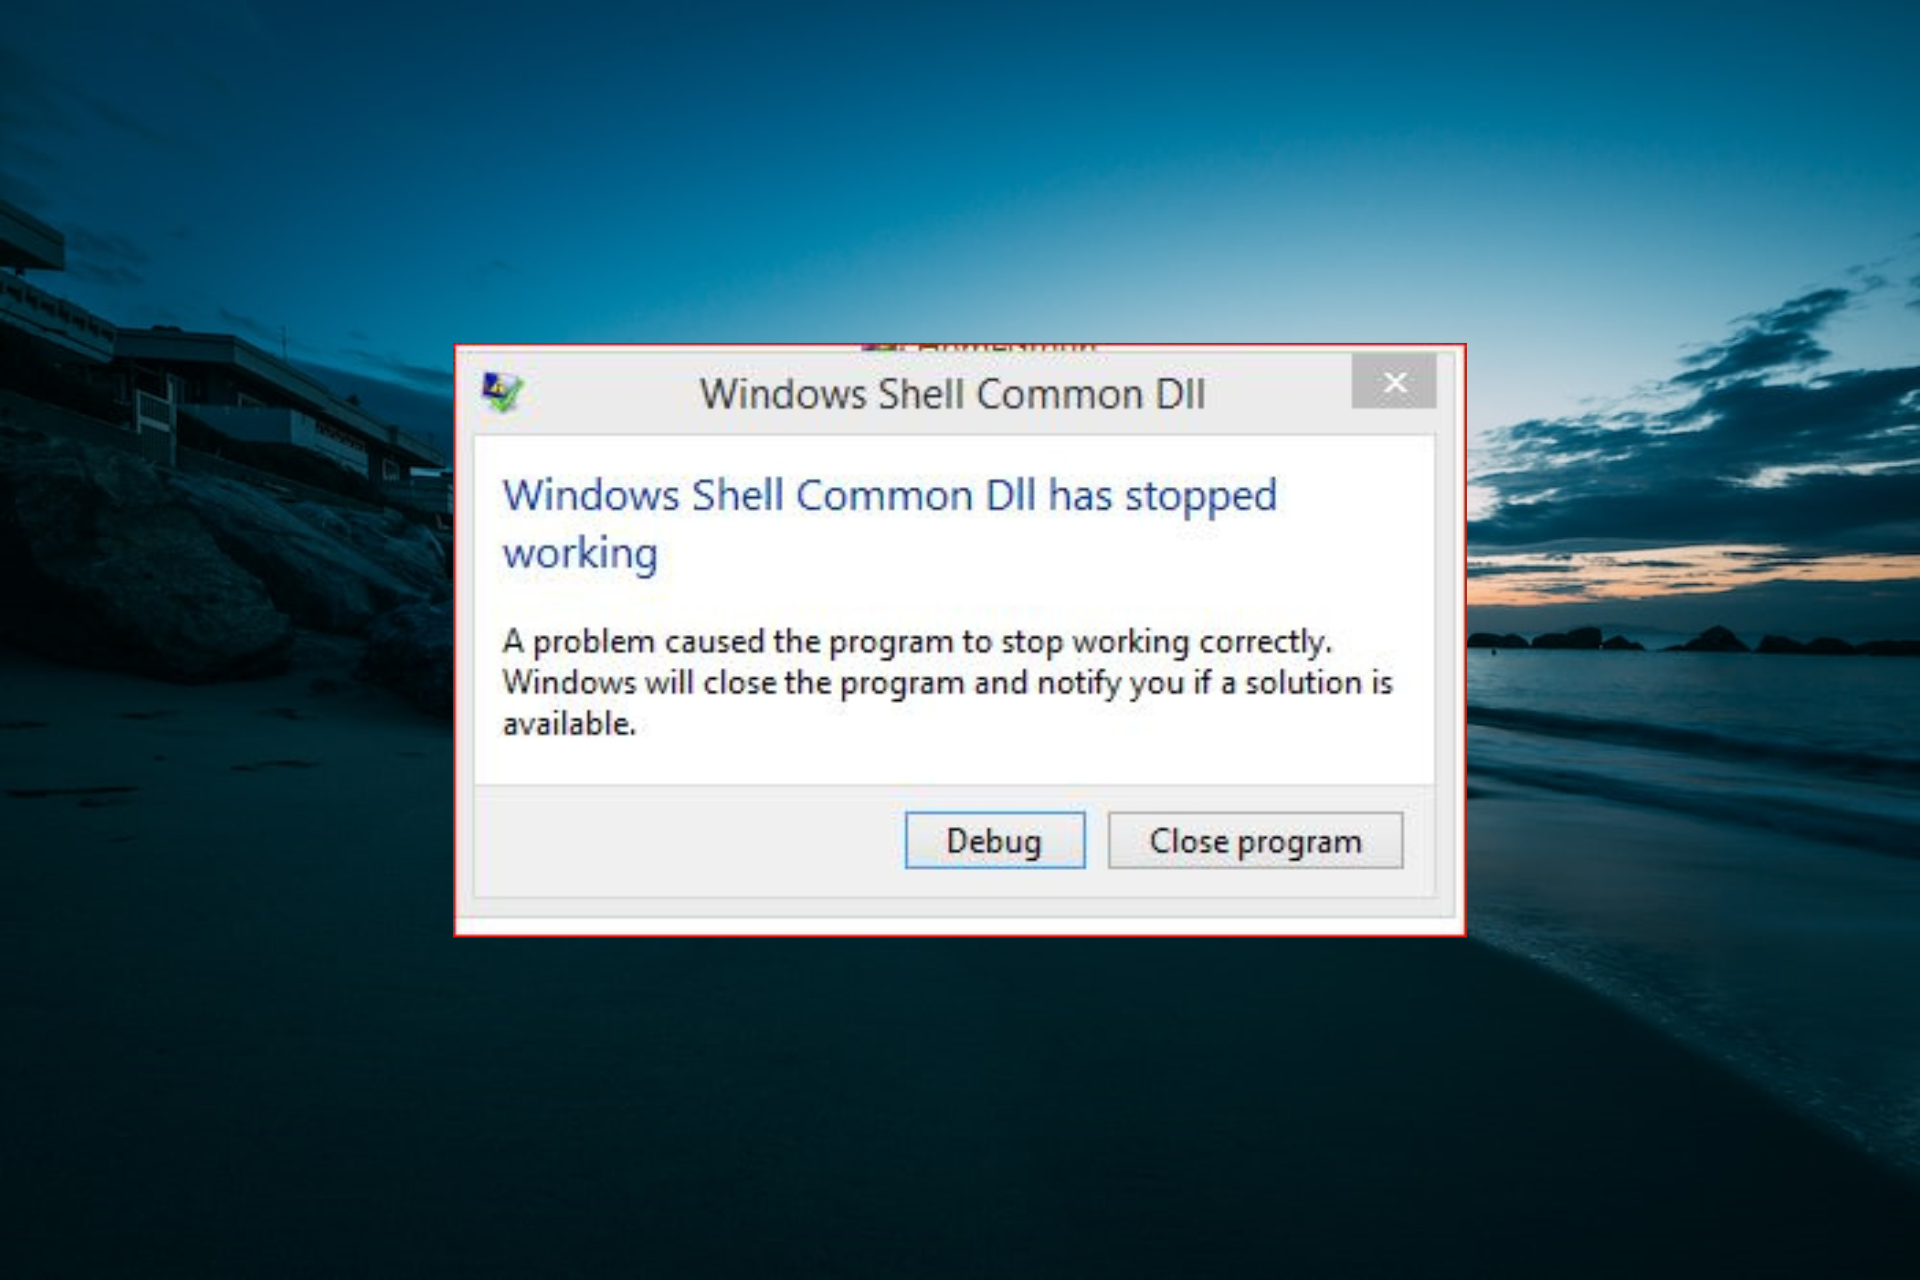 La DLL común de Windows Shell ha dejado de funcionar